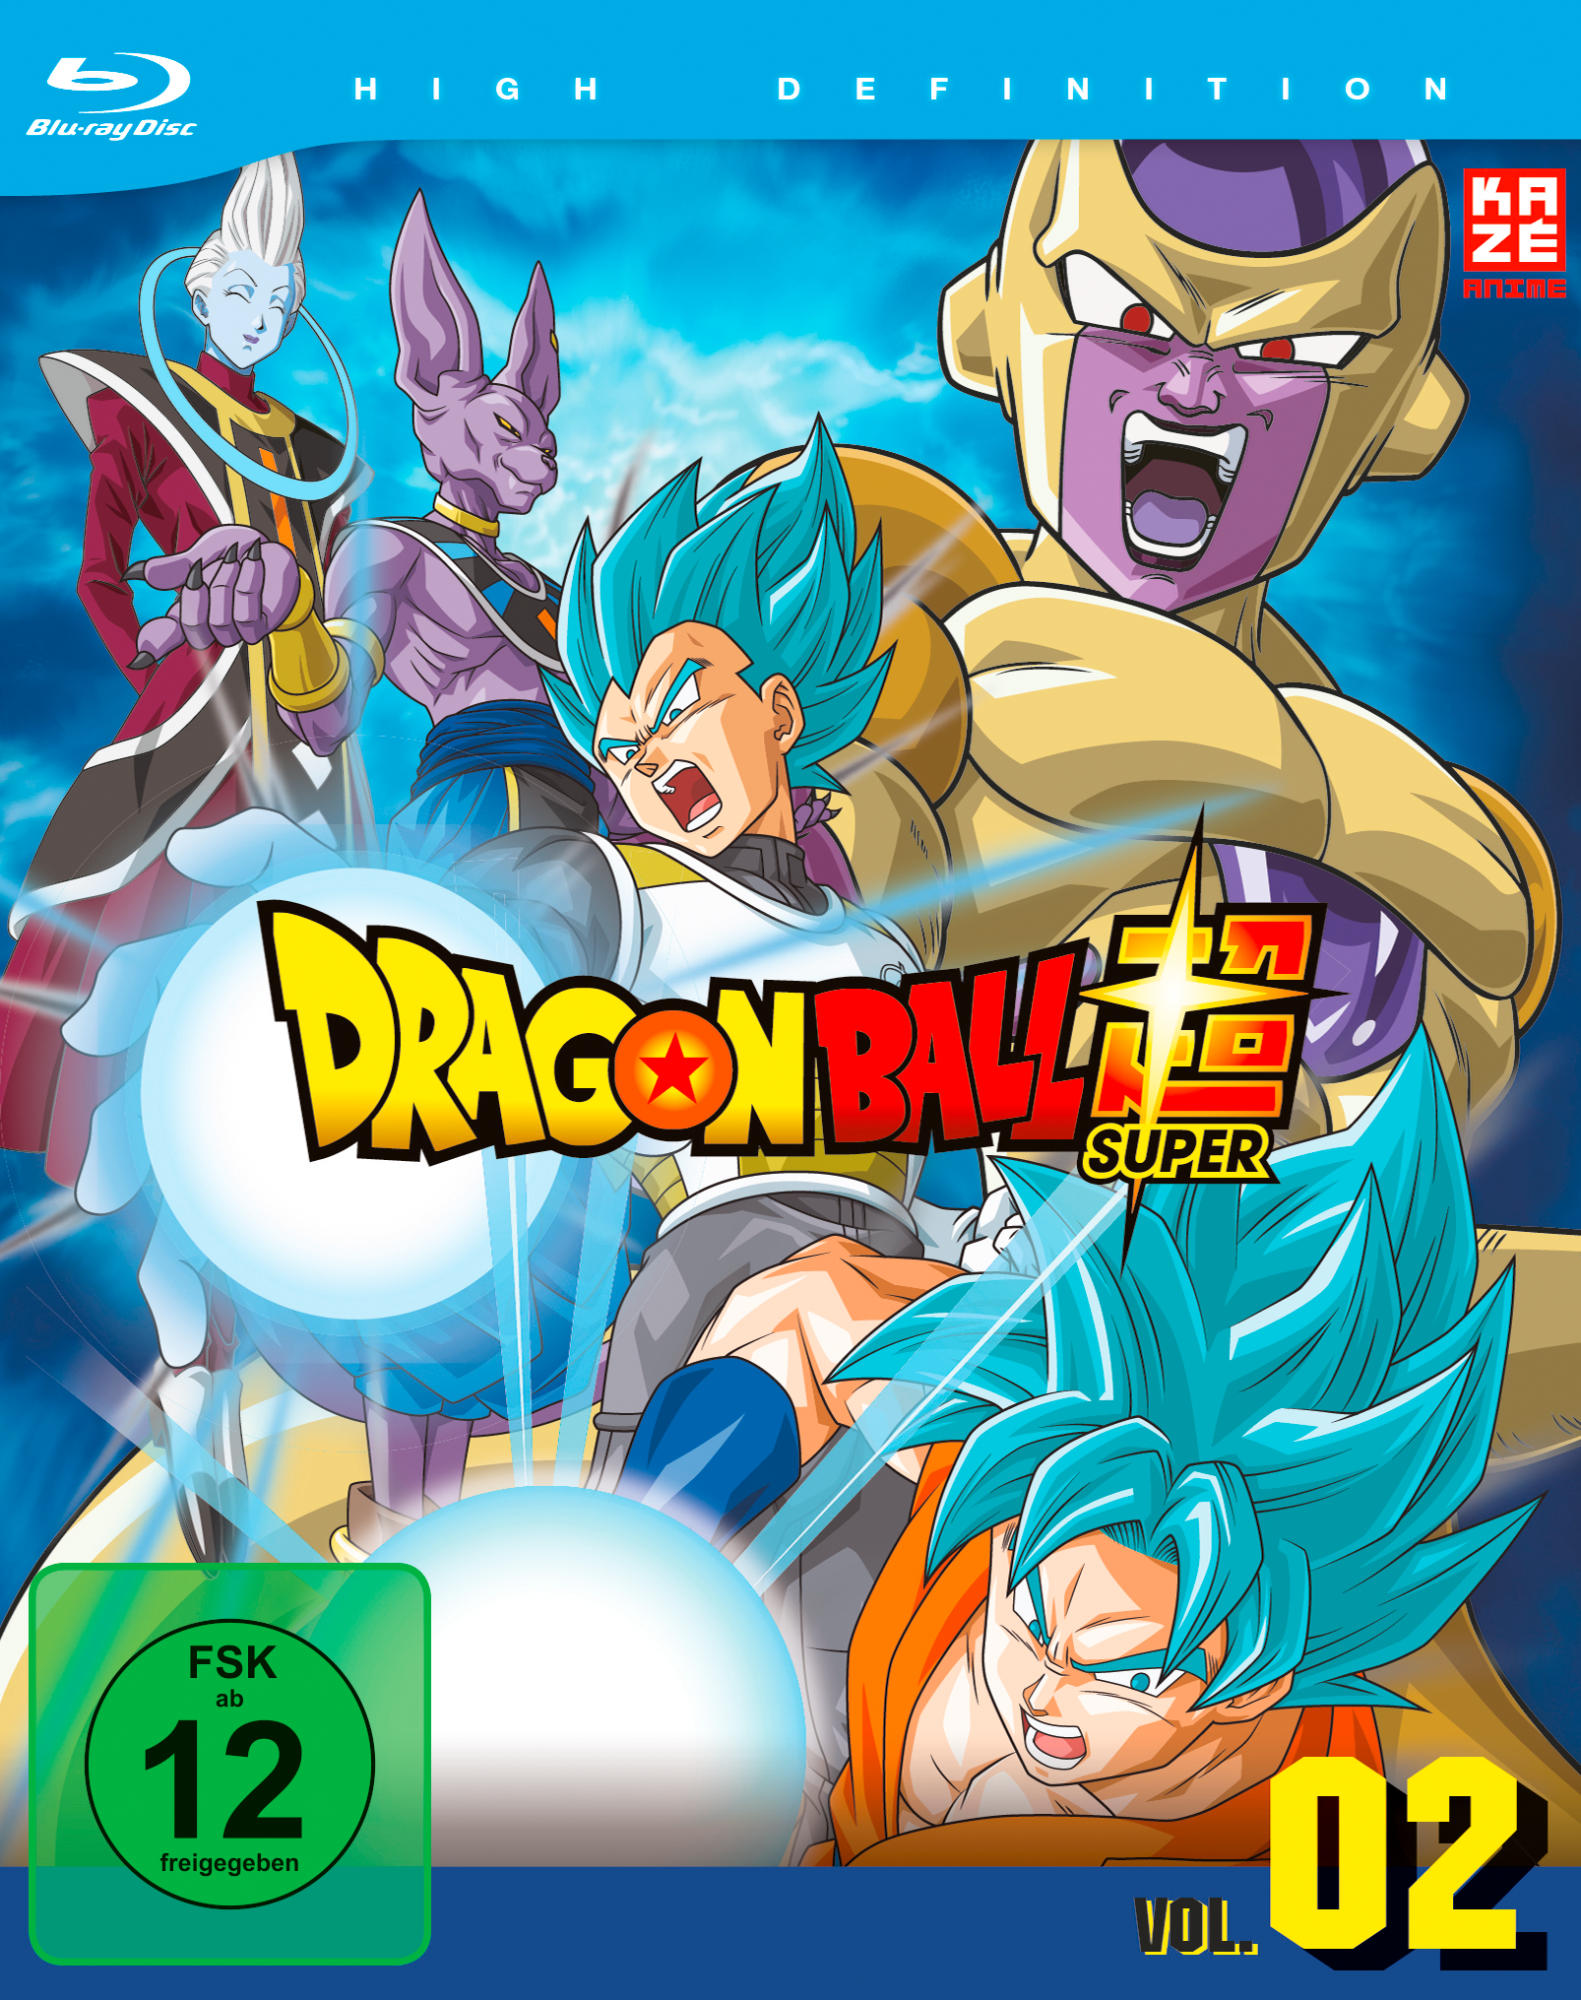 Dragonball Super - 2. Goldener Freezer Arc: Blu-ray